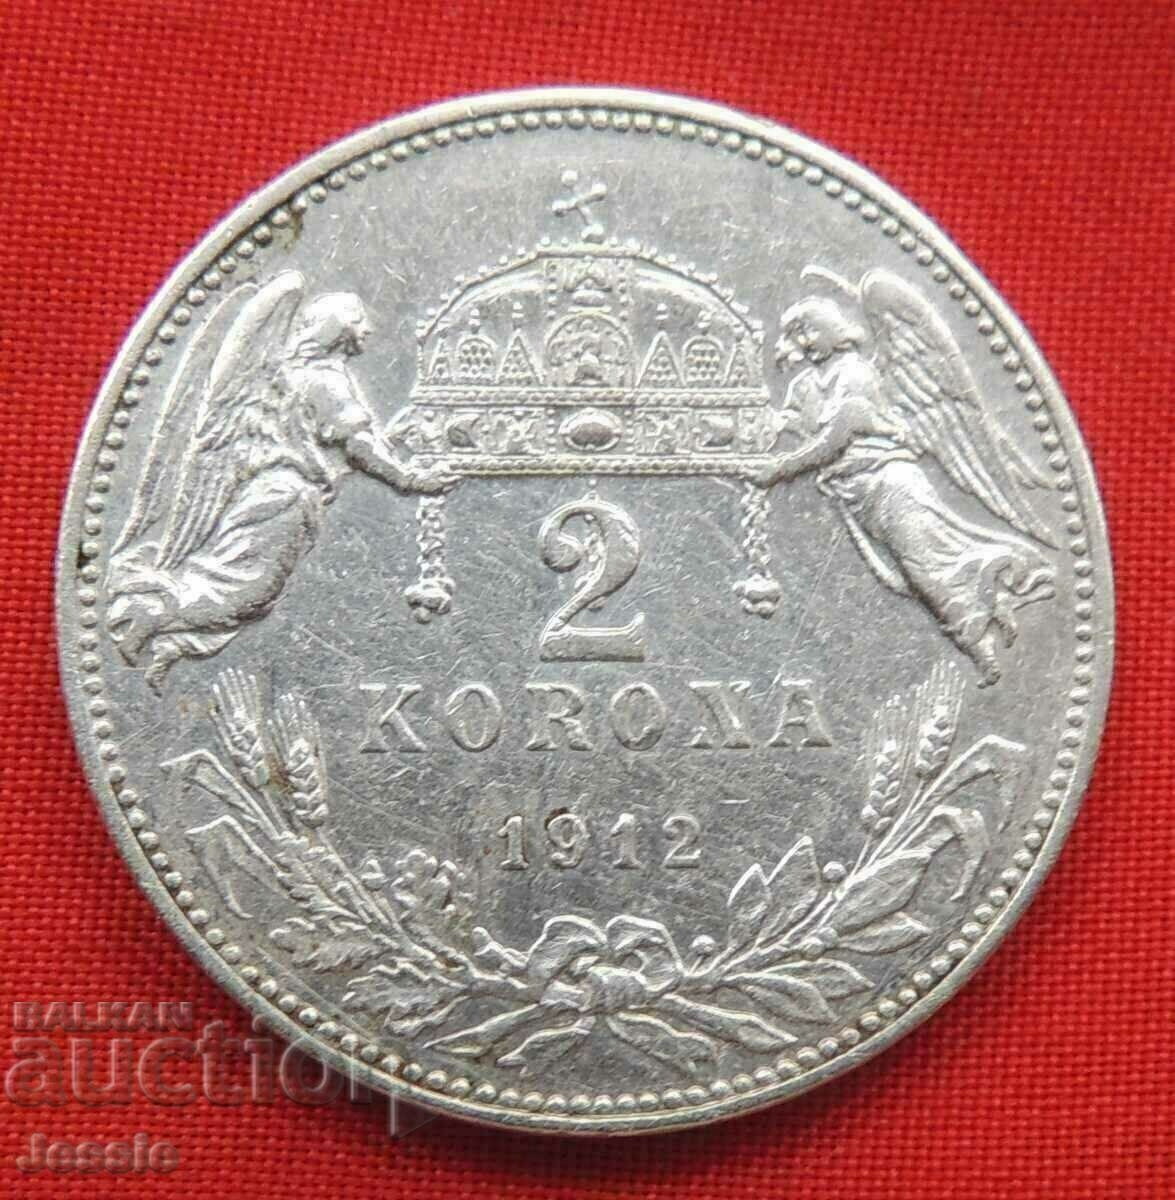 2 Korona 1912 KB Austohungary / pentru Ungaria / argint CALITATE